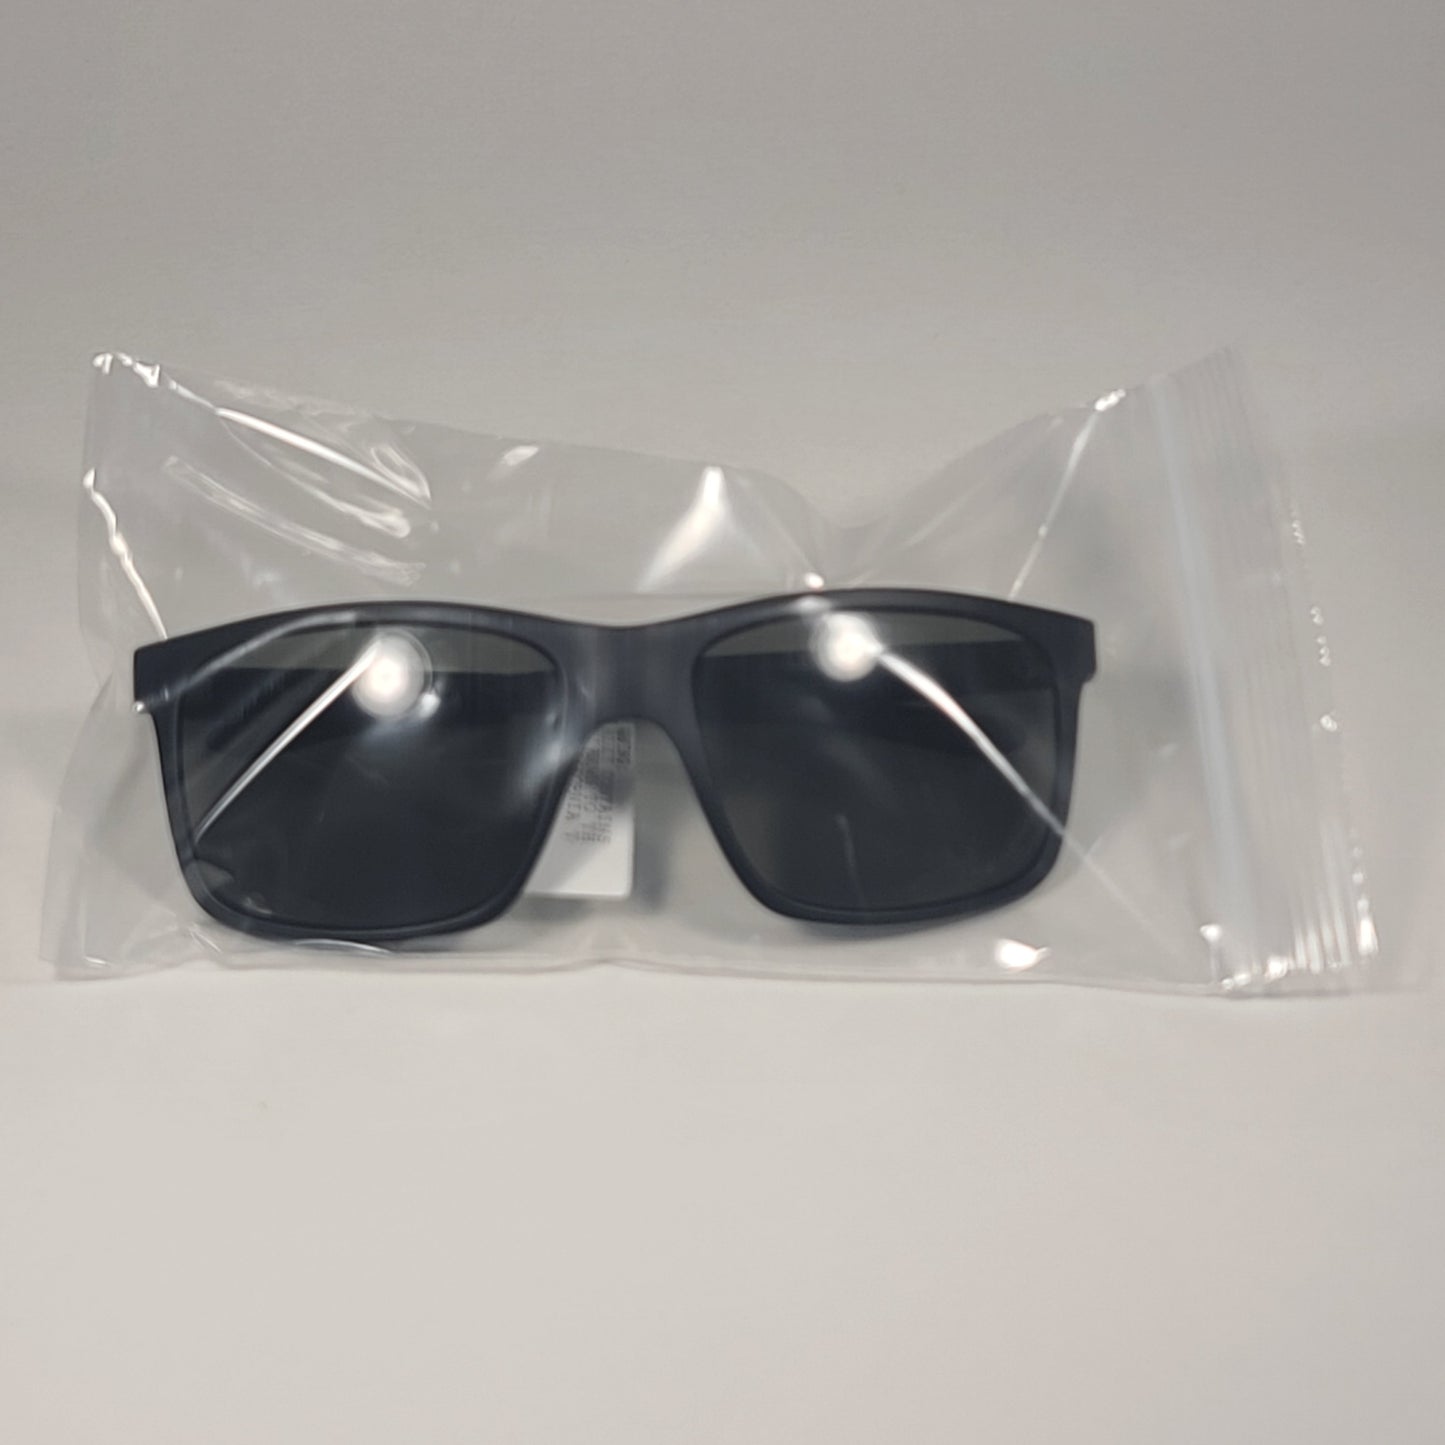 Timberland TB7255 02N Rectangle Sport Sunglasses Matte Black Frame Green Lens - Sunglasses